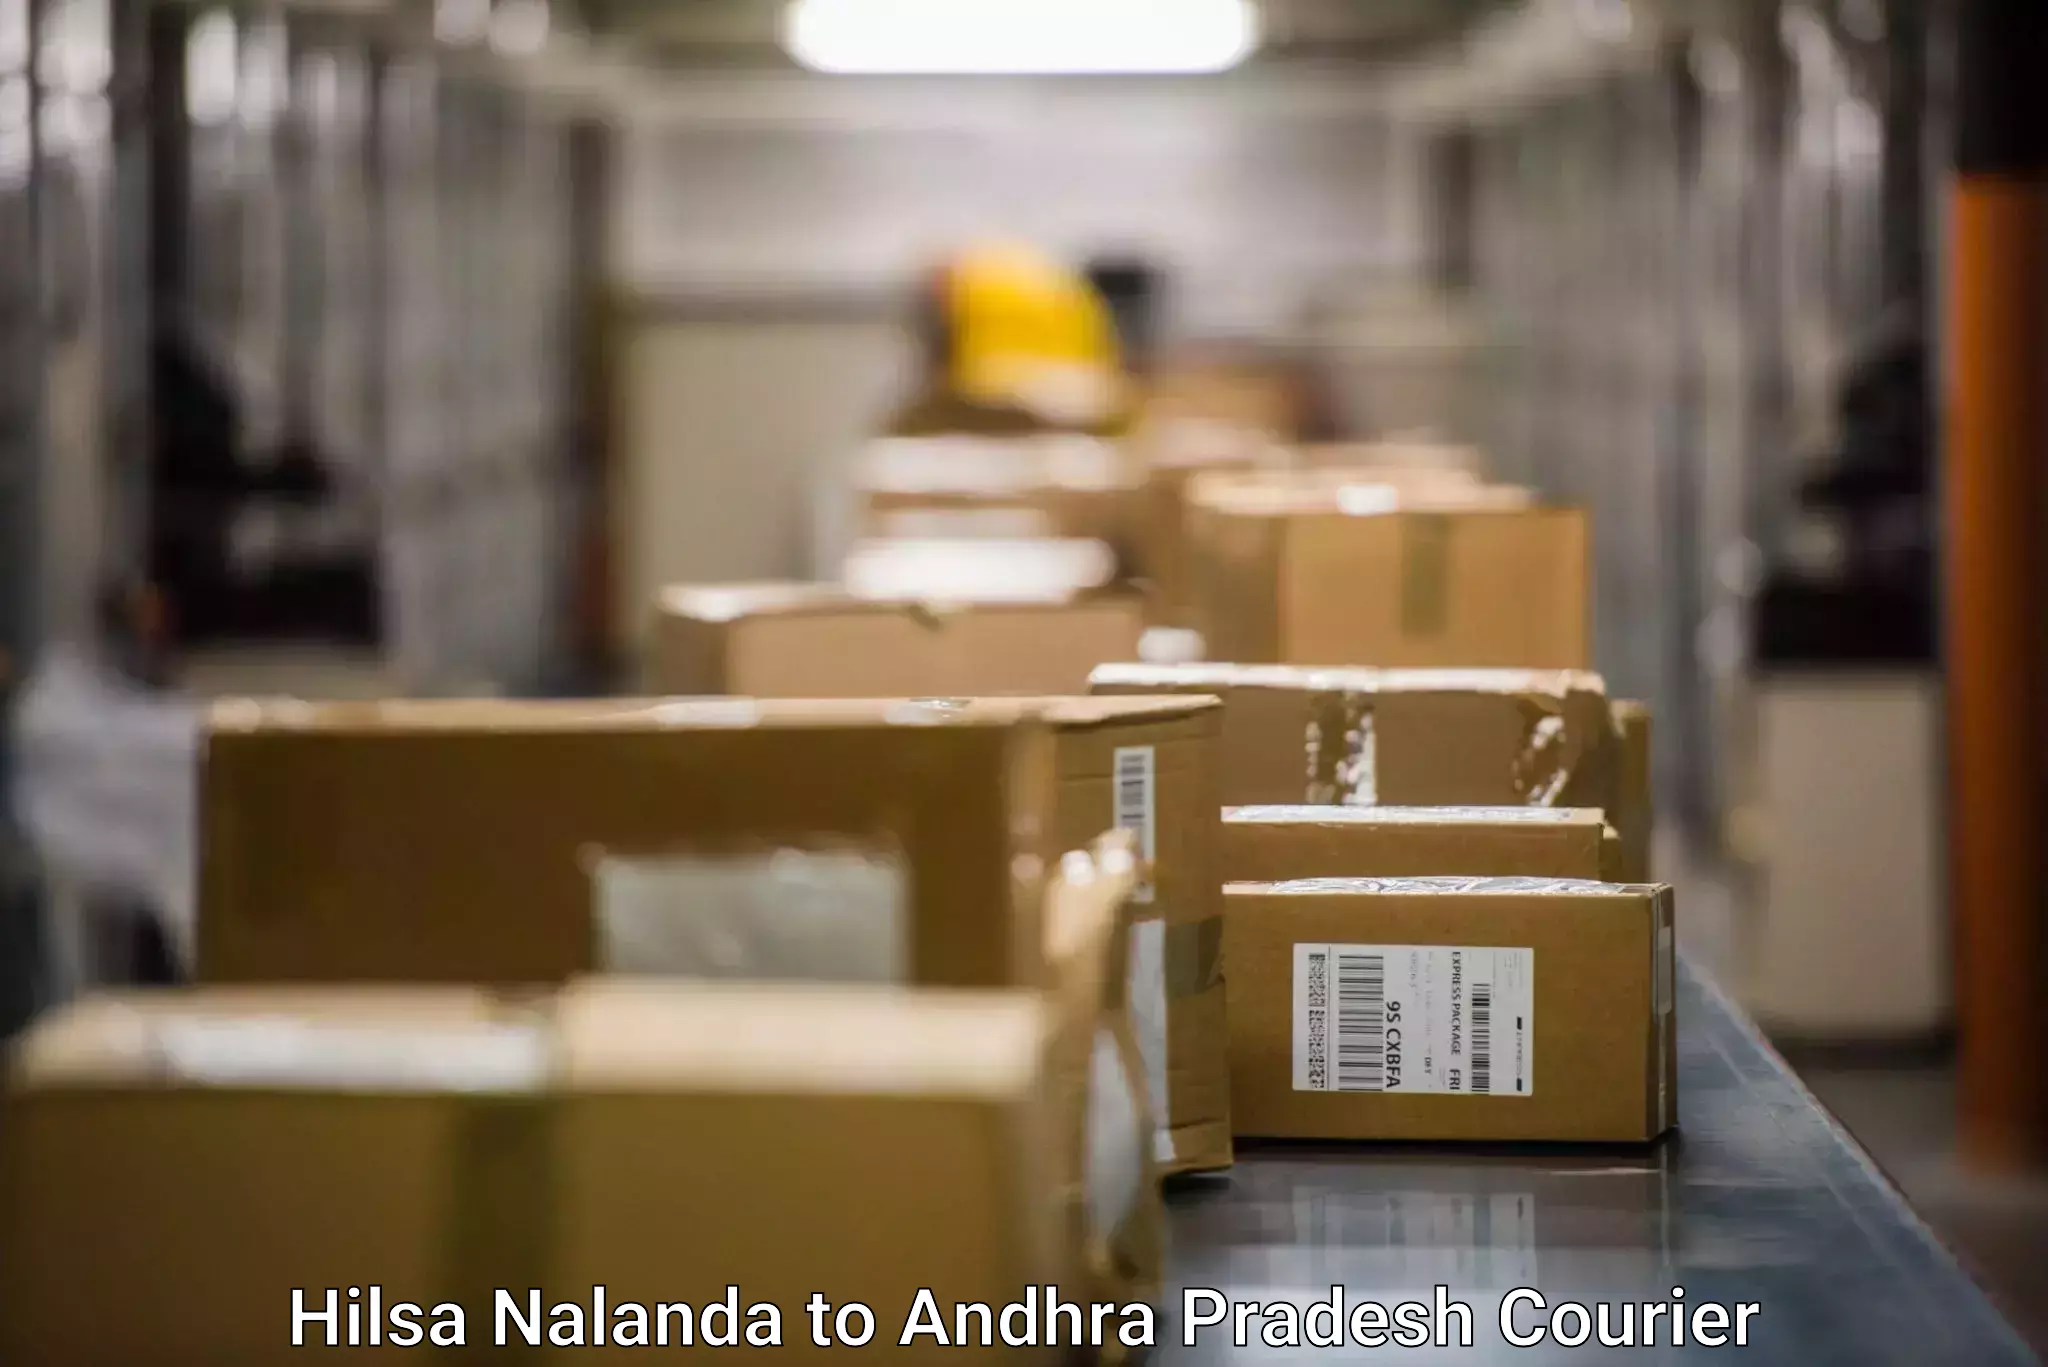 Global courier networks Hilsa Nalanda to Vuyyuru